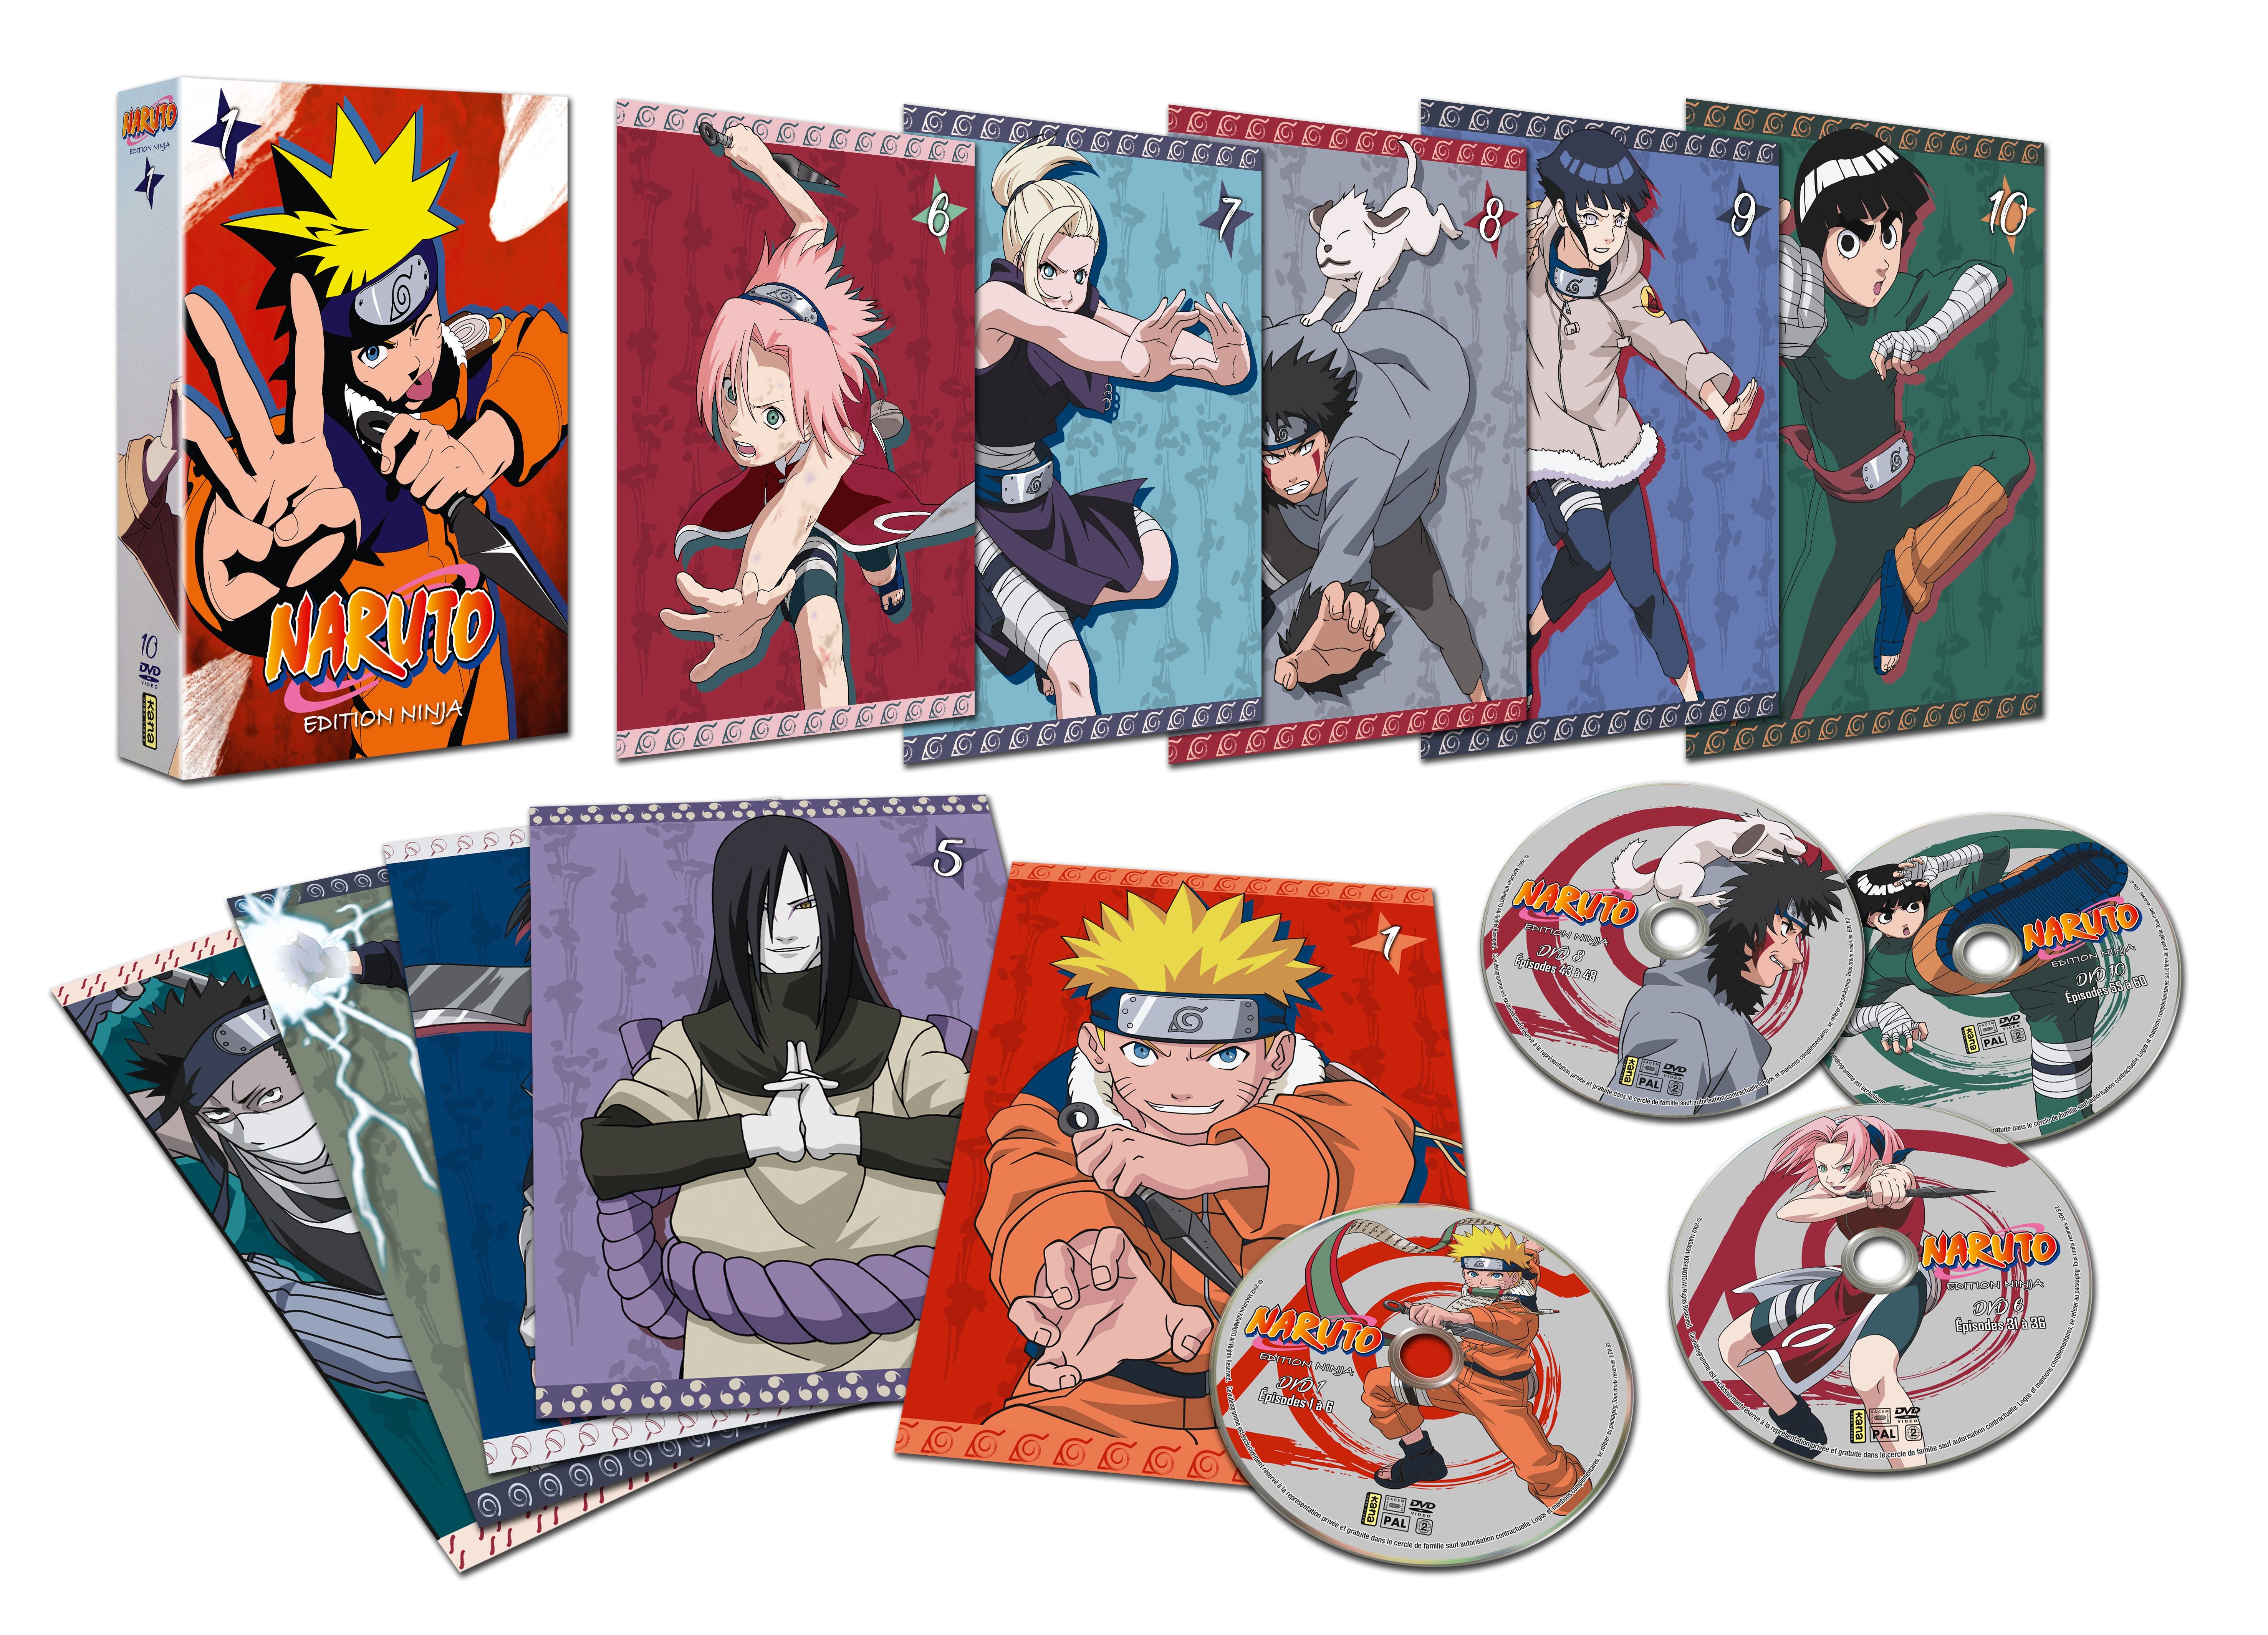 Naruto - Edition Ninja Volume 1